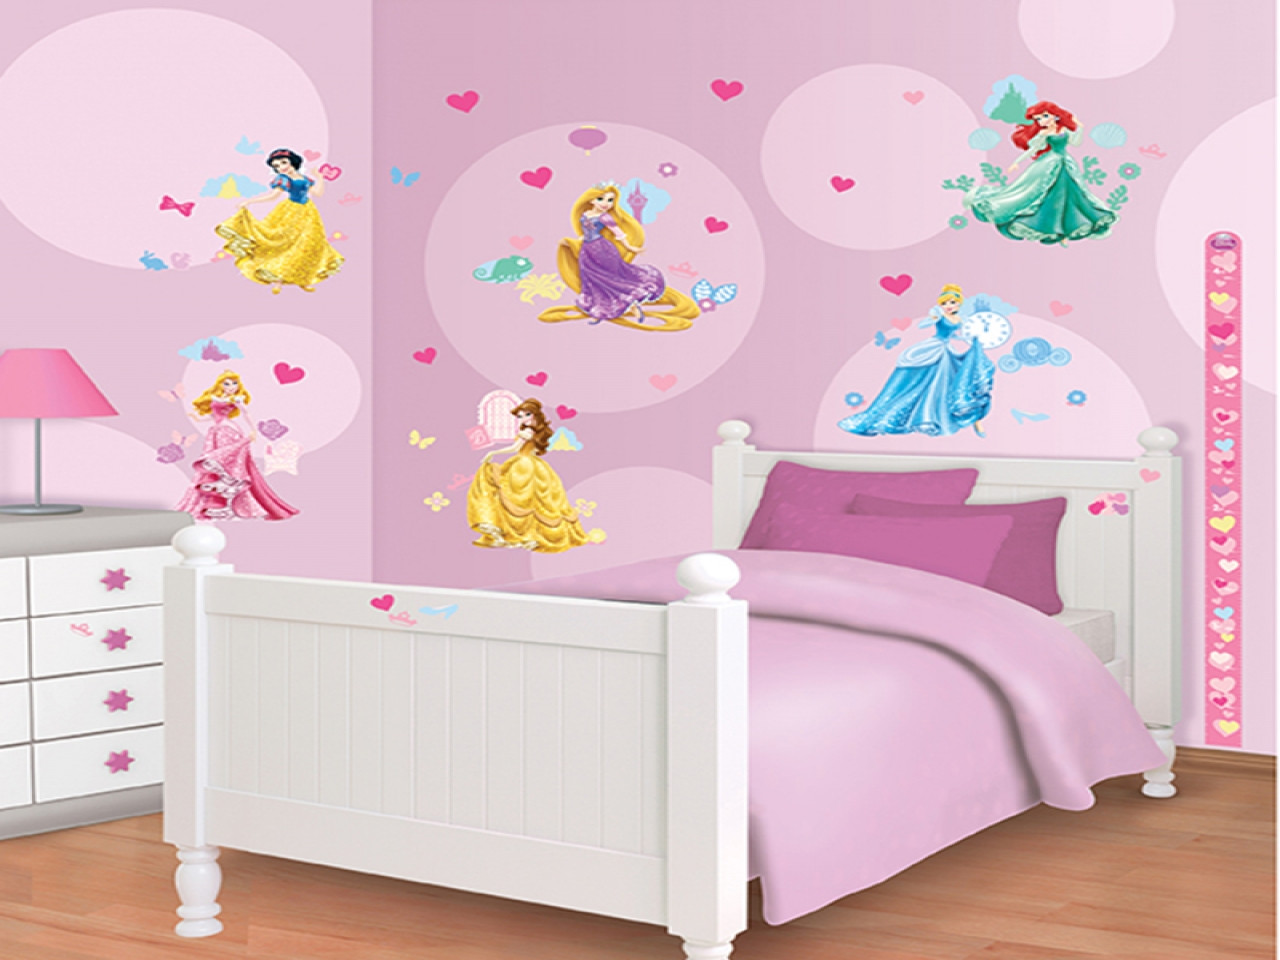 Disney Princess Bedroom Decor
 Wallpaper ideas for bedroom disney princess room decor